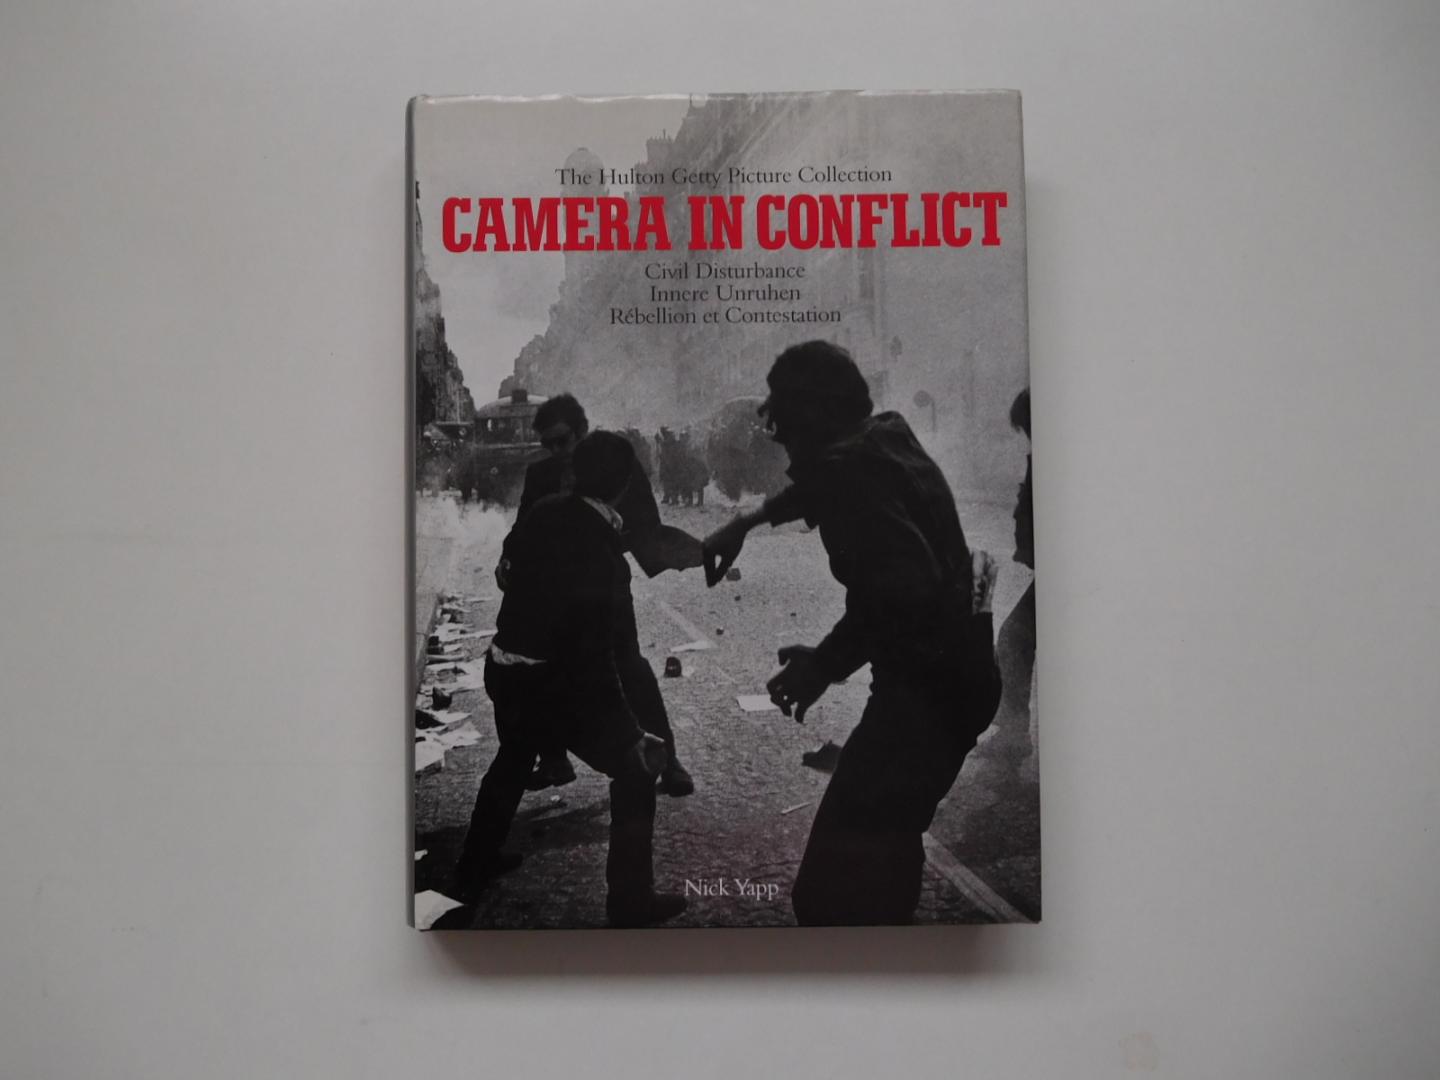 Nick Yapp - Camera in conflict, civil disurbance